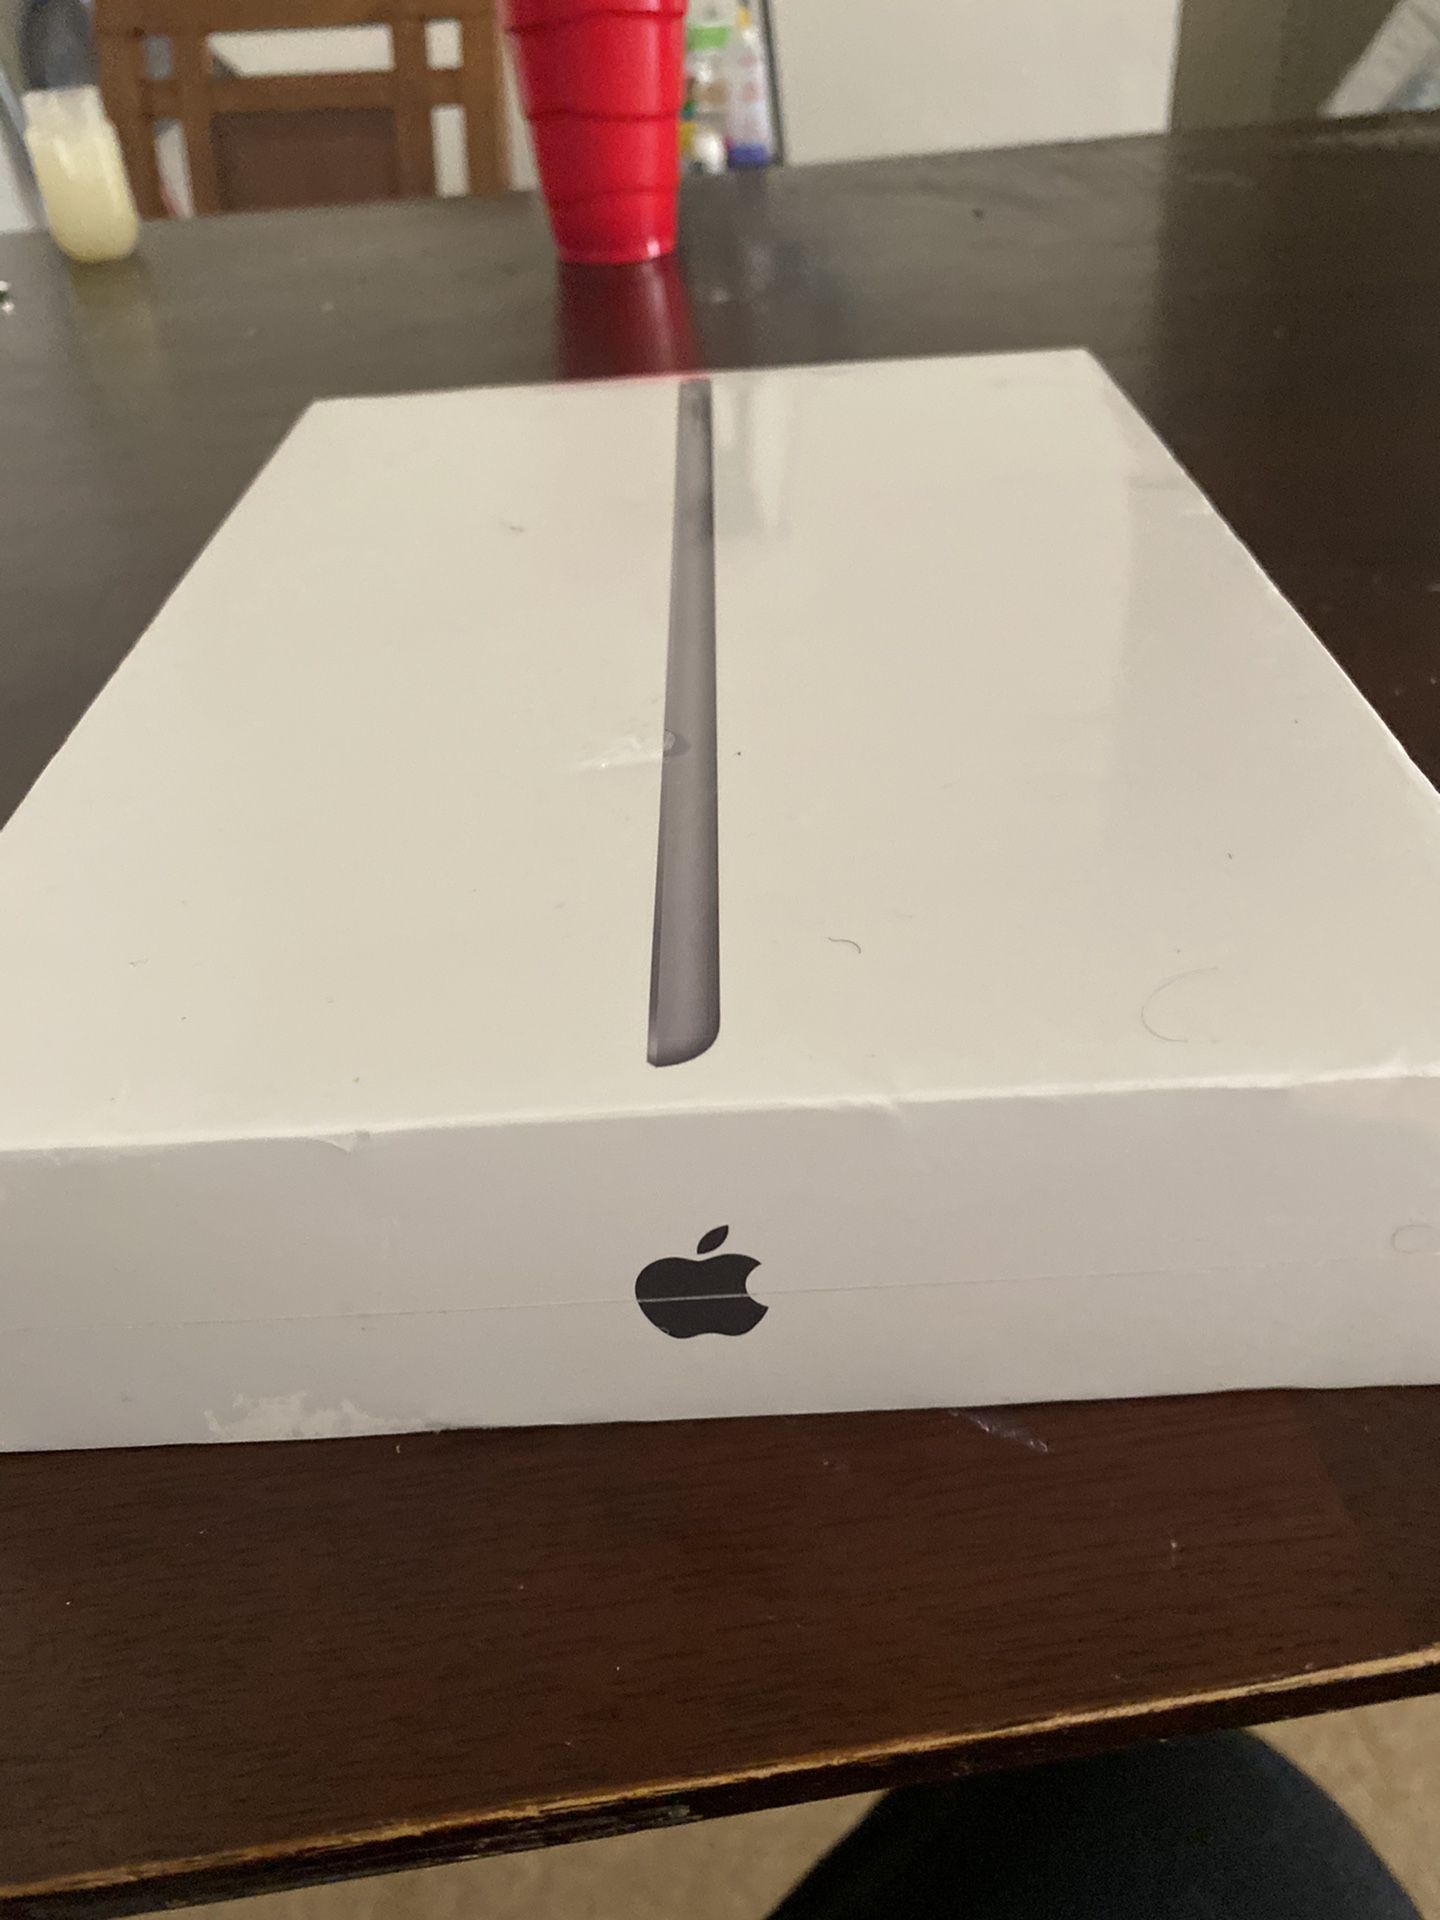 iPad 7th generation wifi 128 GB brand new factory sealed